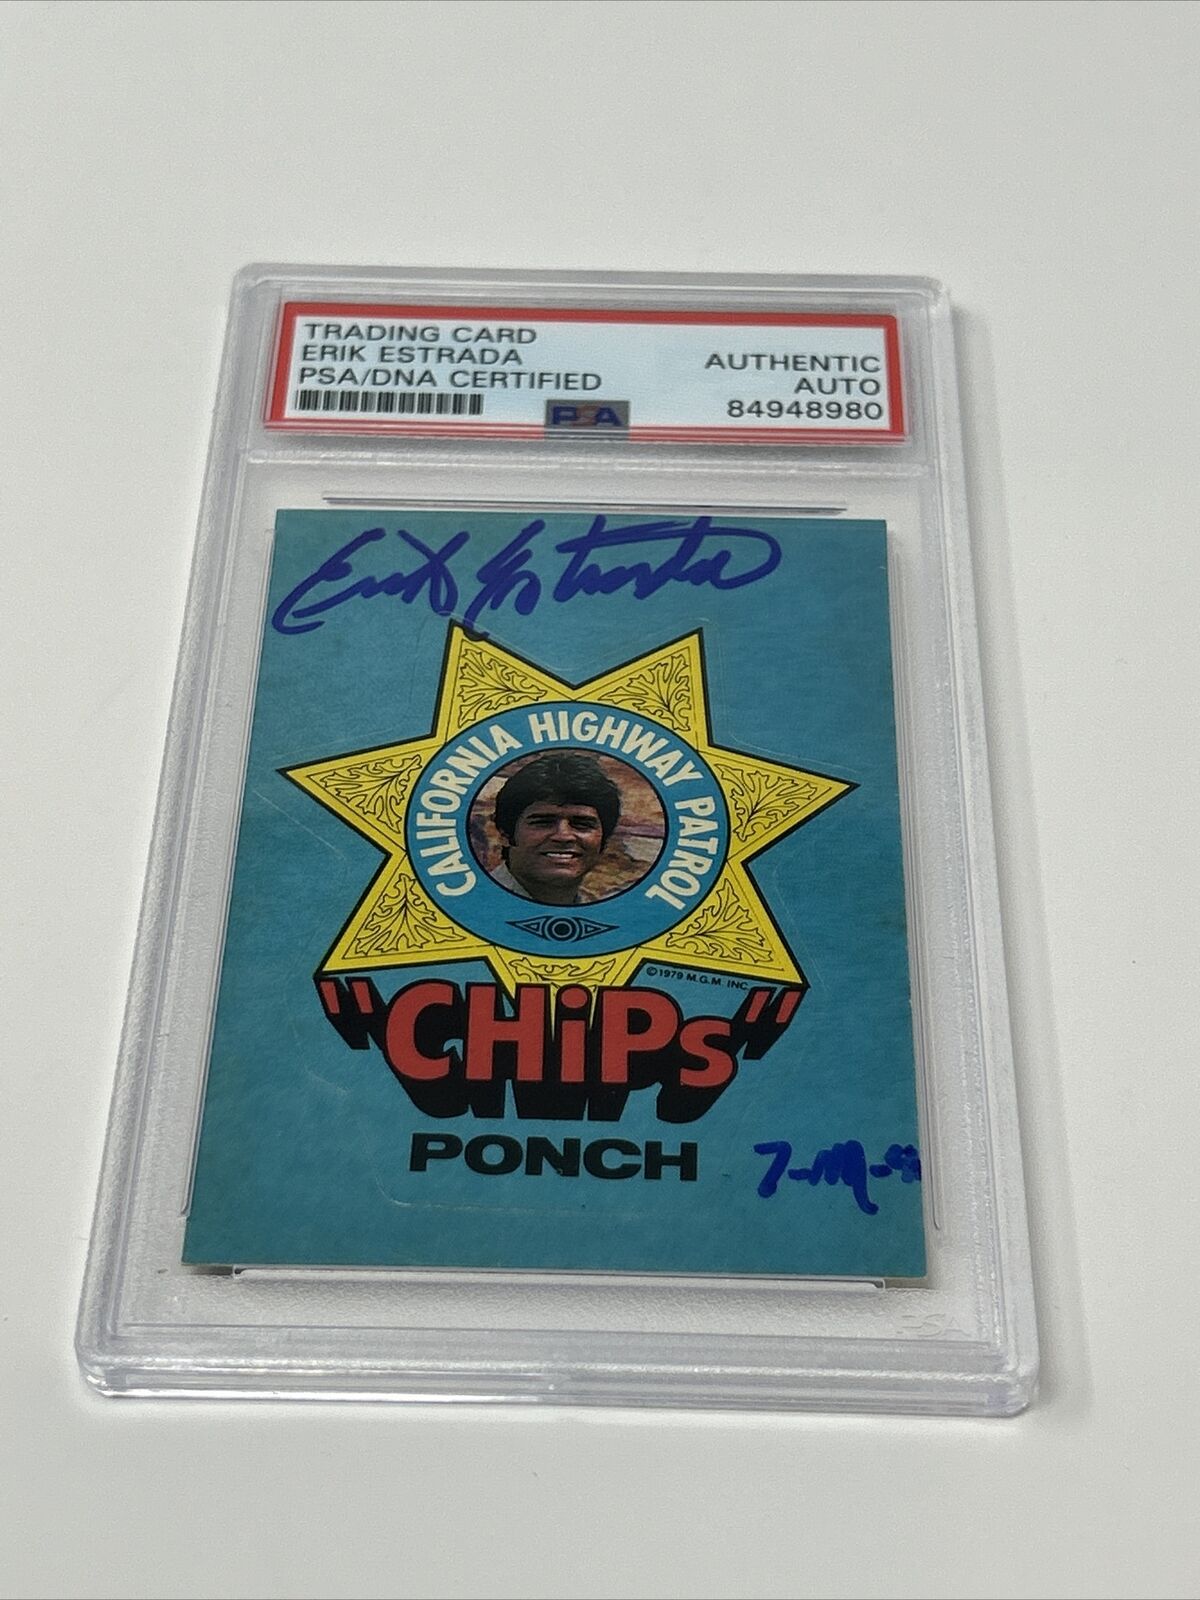 Erik Estrada signed autograph auto 1979 Donruss CHiPs Trading Card/Sticker PSA